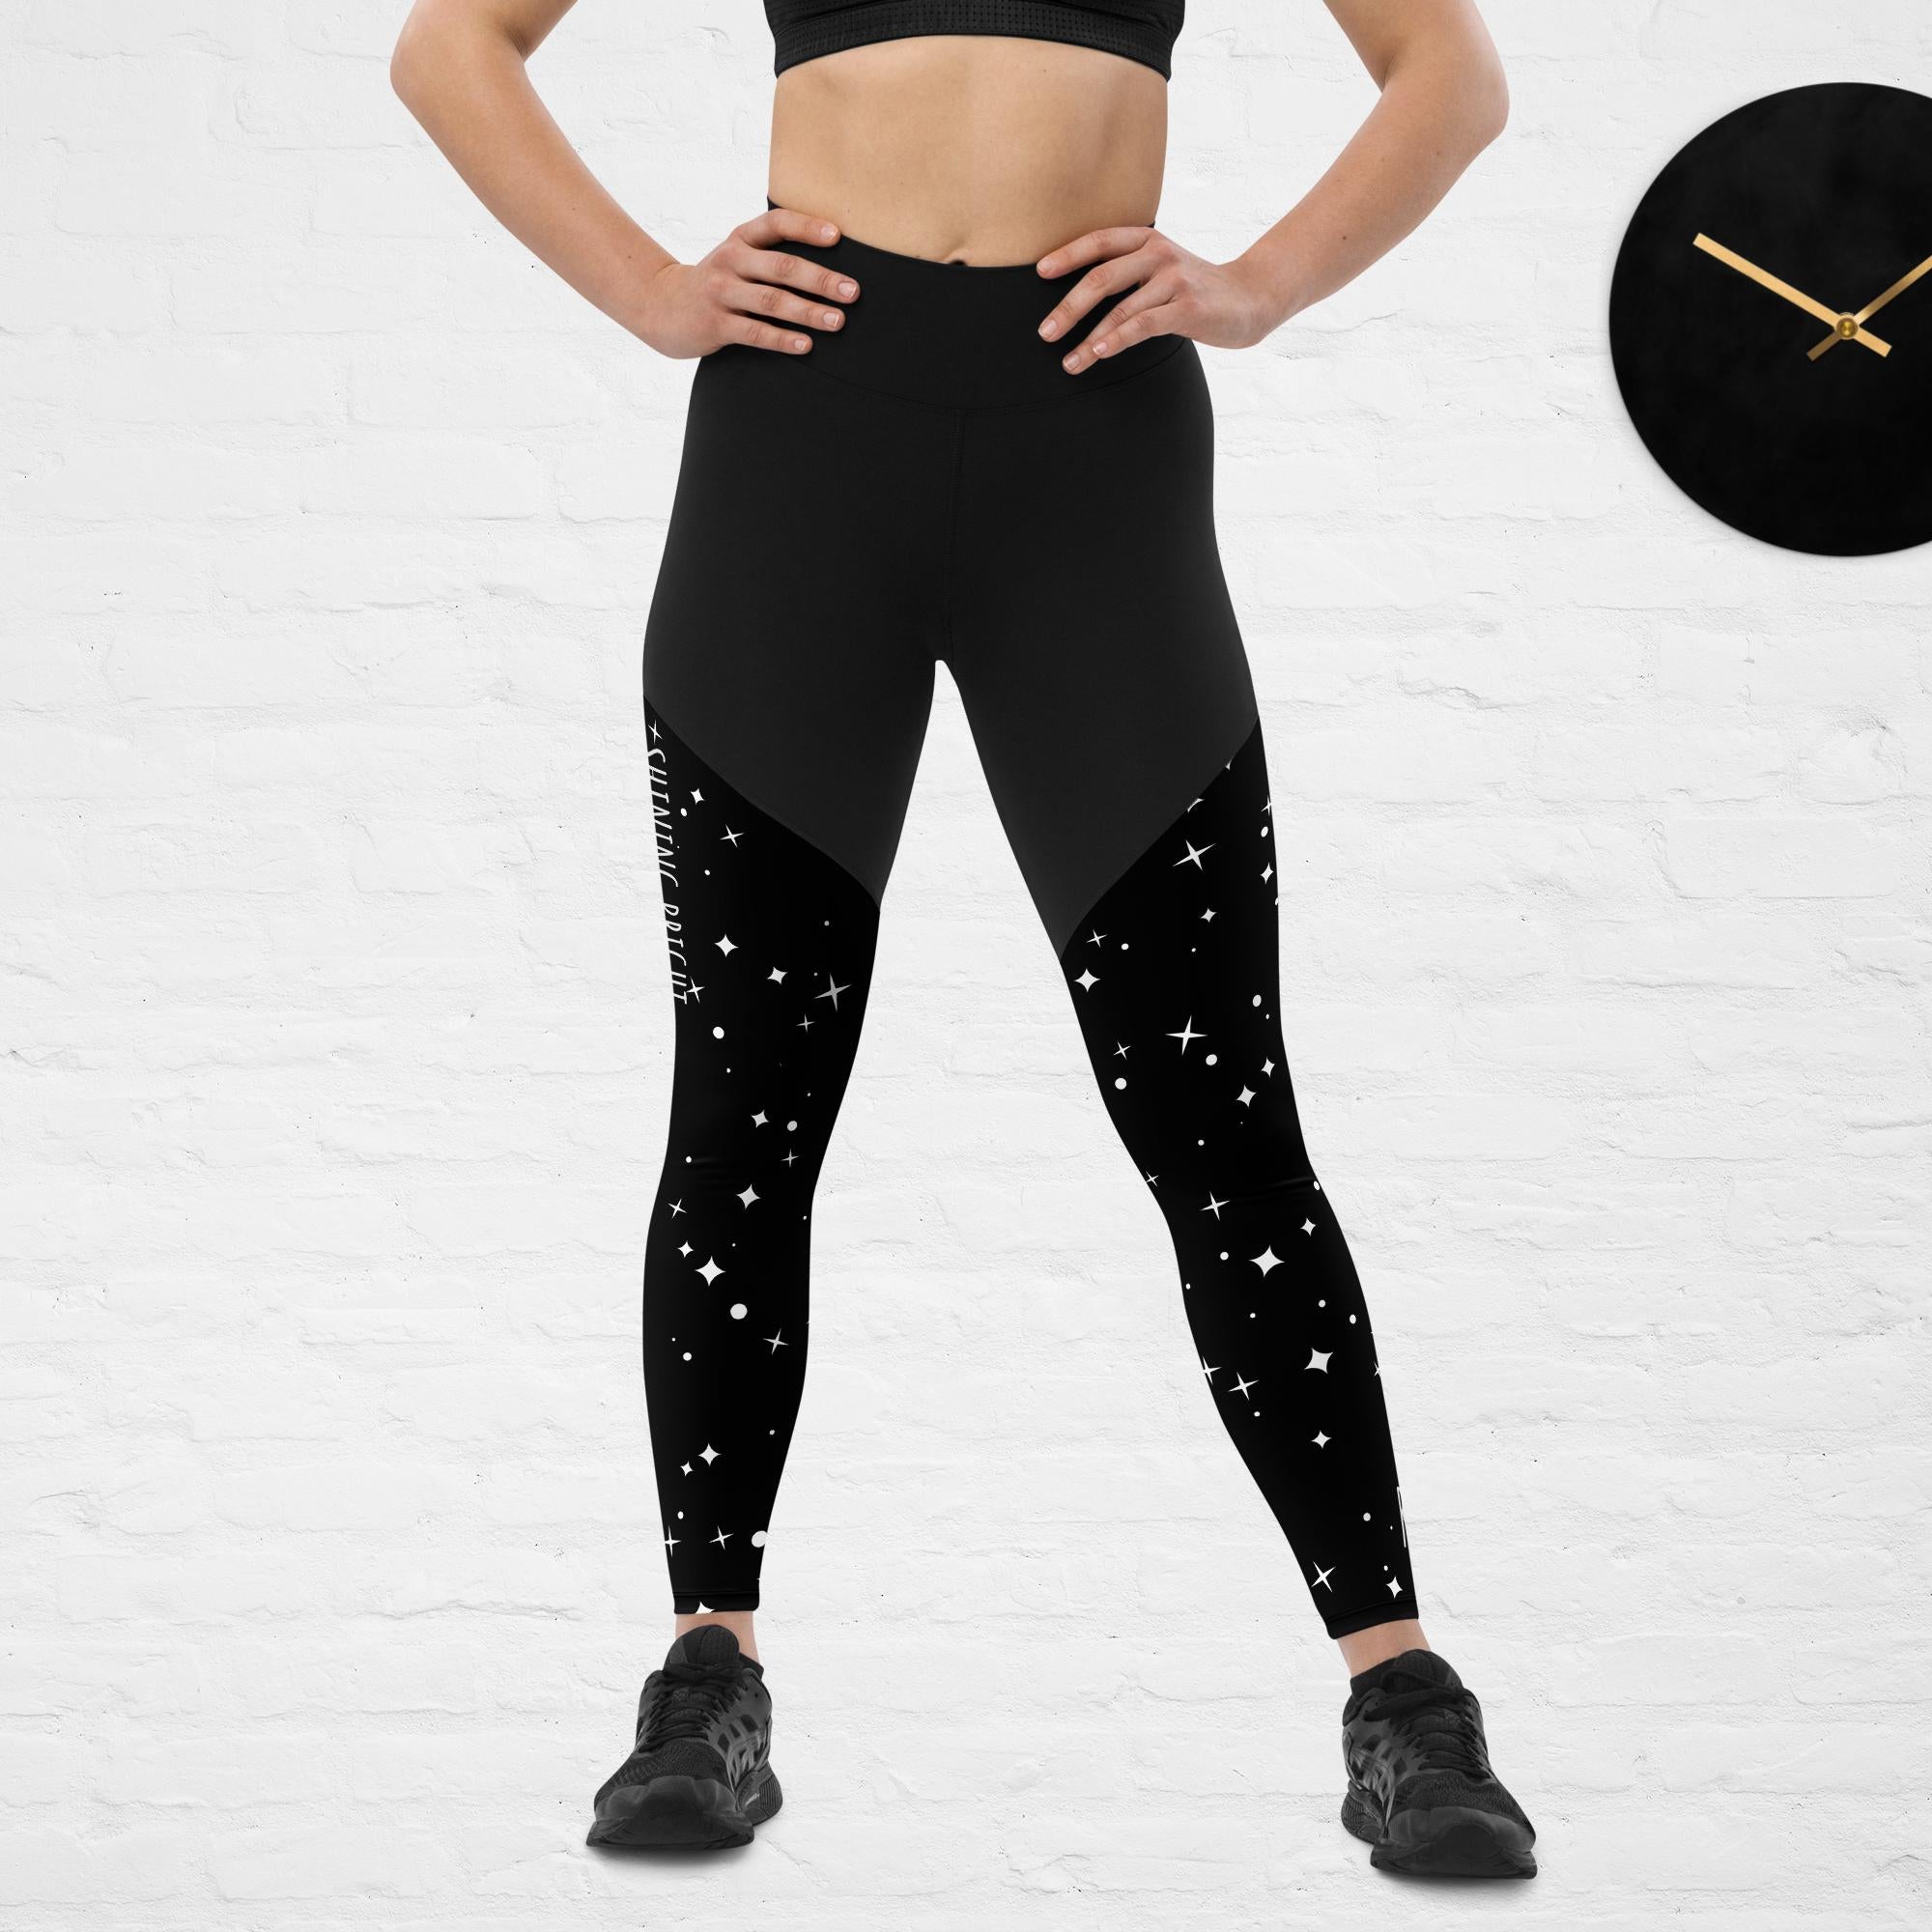 Black sports leggings with stars on lower legs